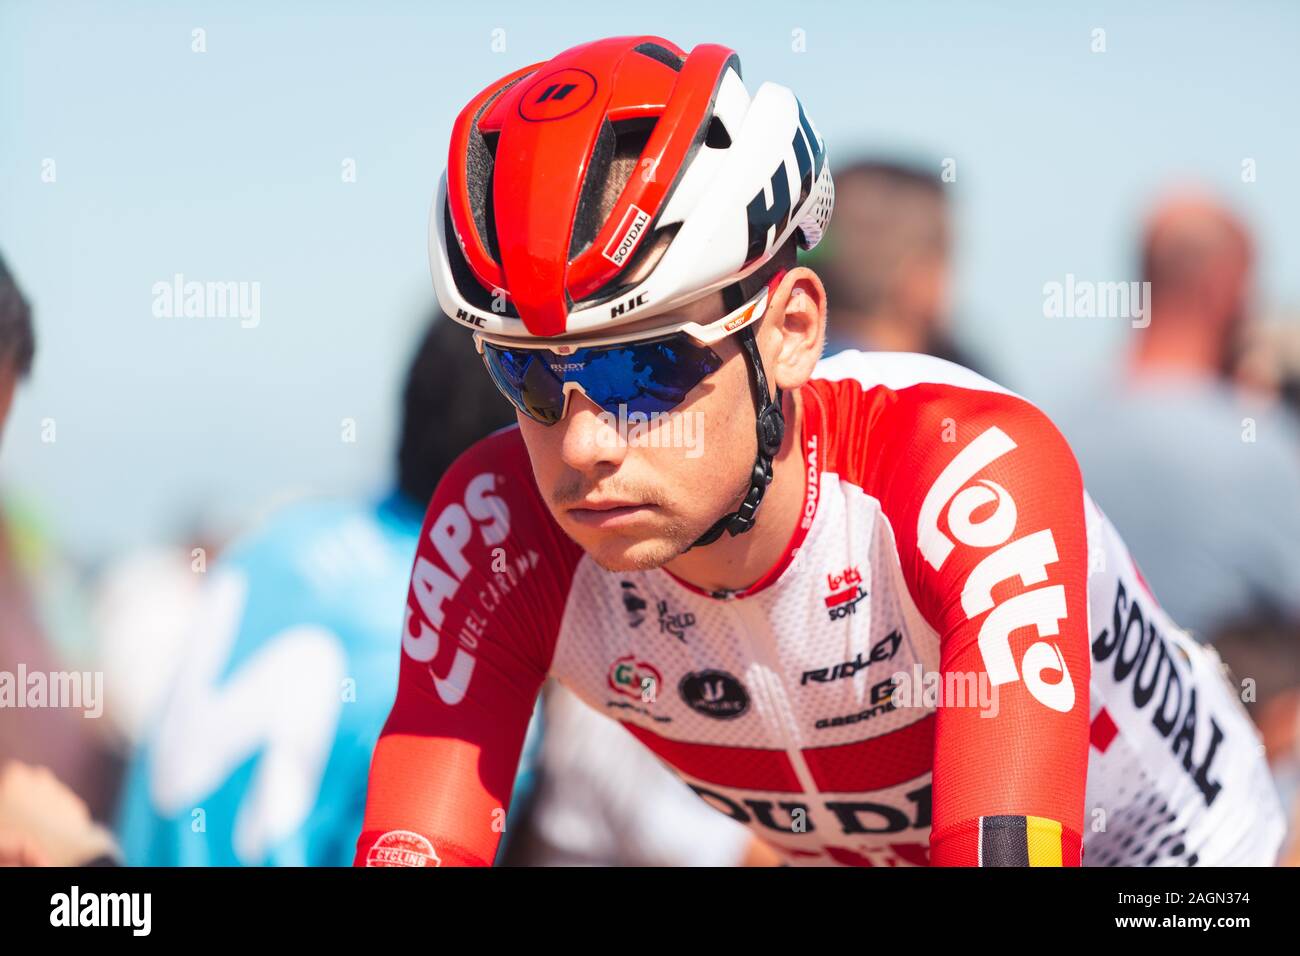 San Vicente de la Barquera, Spain-September 7, 2019: Harm VANHOUCKE, cyclist of the LOTTO SOUDAL Team during stage 14 of La Vuelta a España. Stock Photo